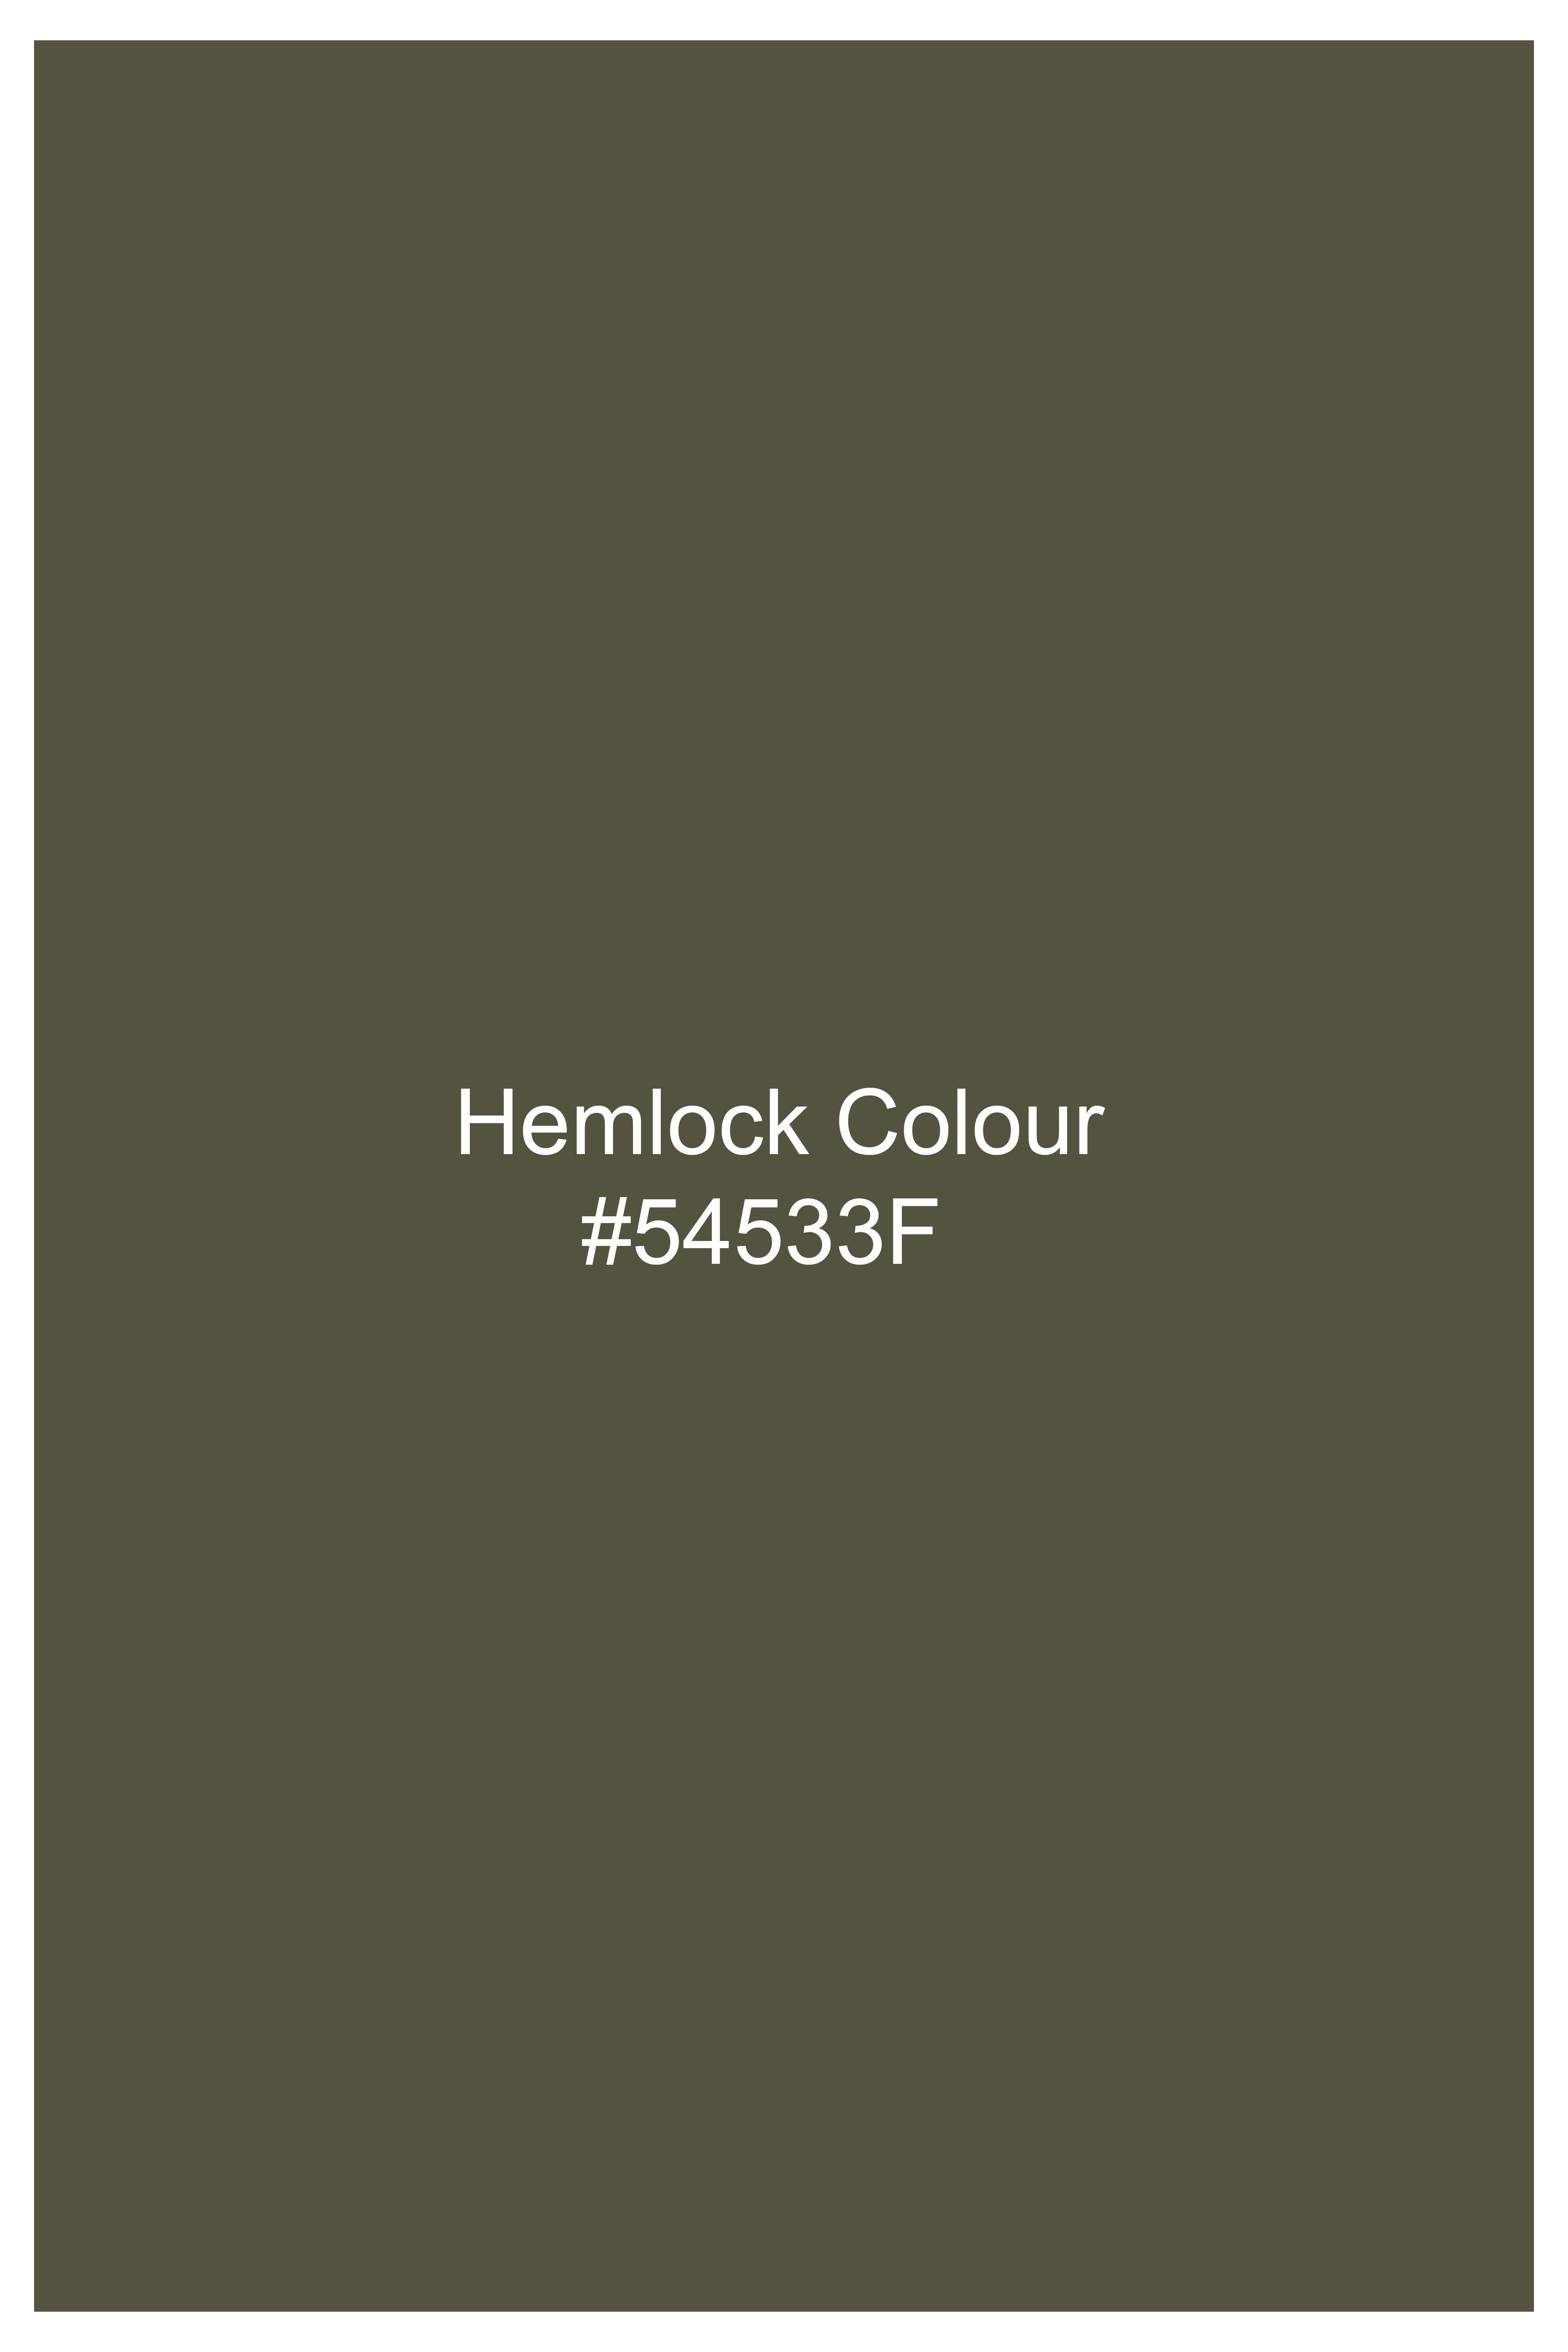 Hemlock Green Premium Cotton Stretchable Traveler Pant T2783-28, T2783-30, T2783-32, T2783-34, T2783-36, T2783-38, T2783-40, T2783-42, T2783-44